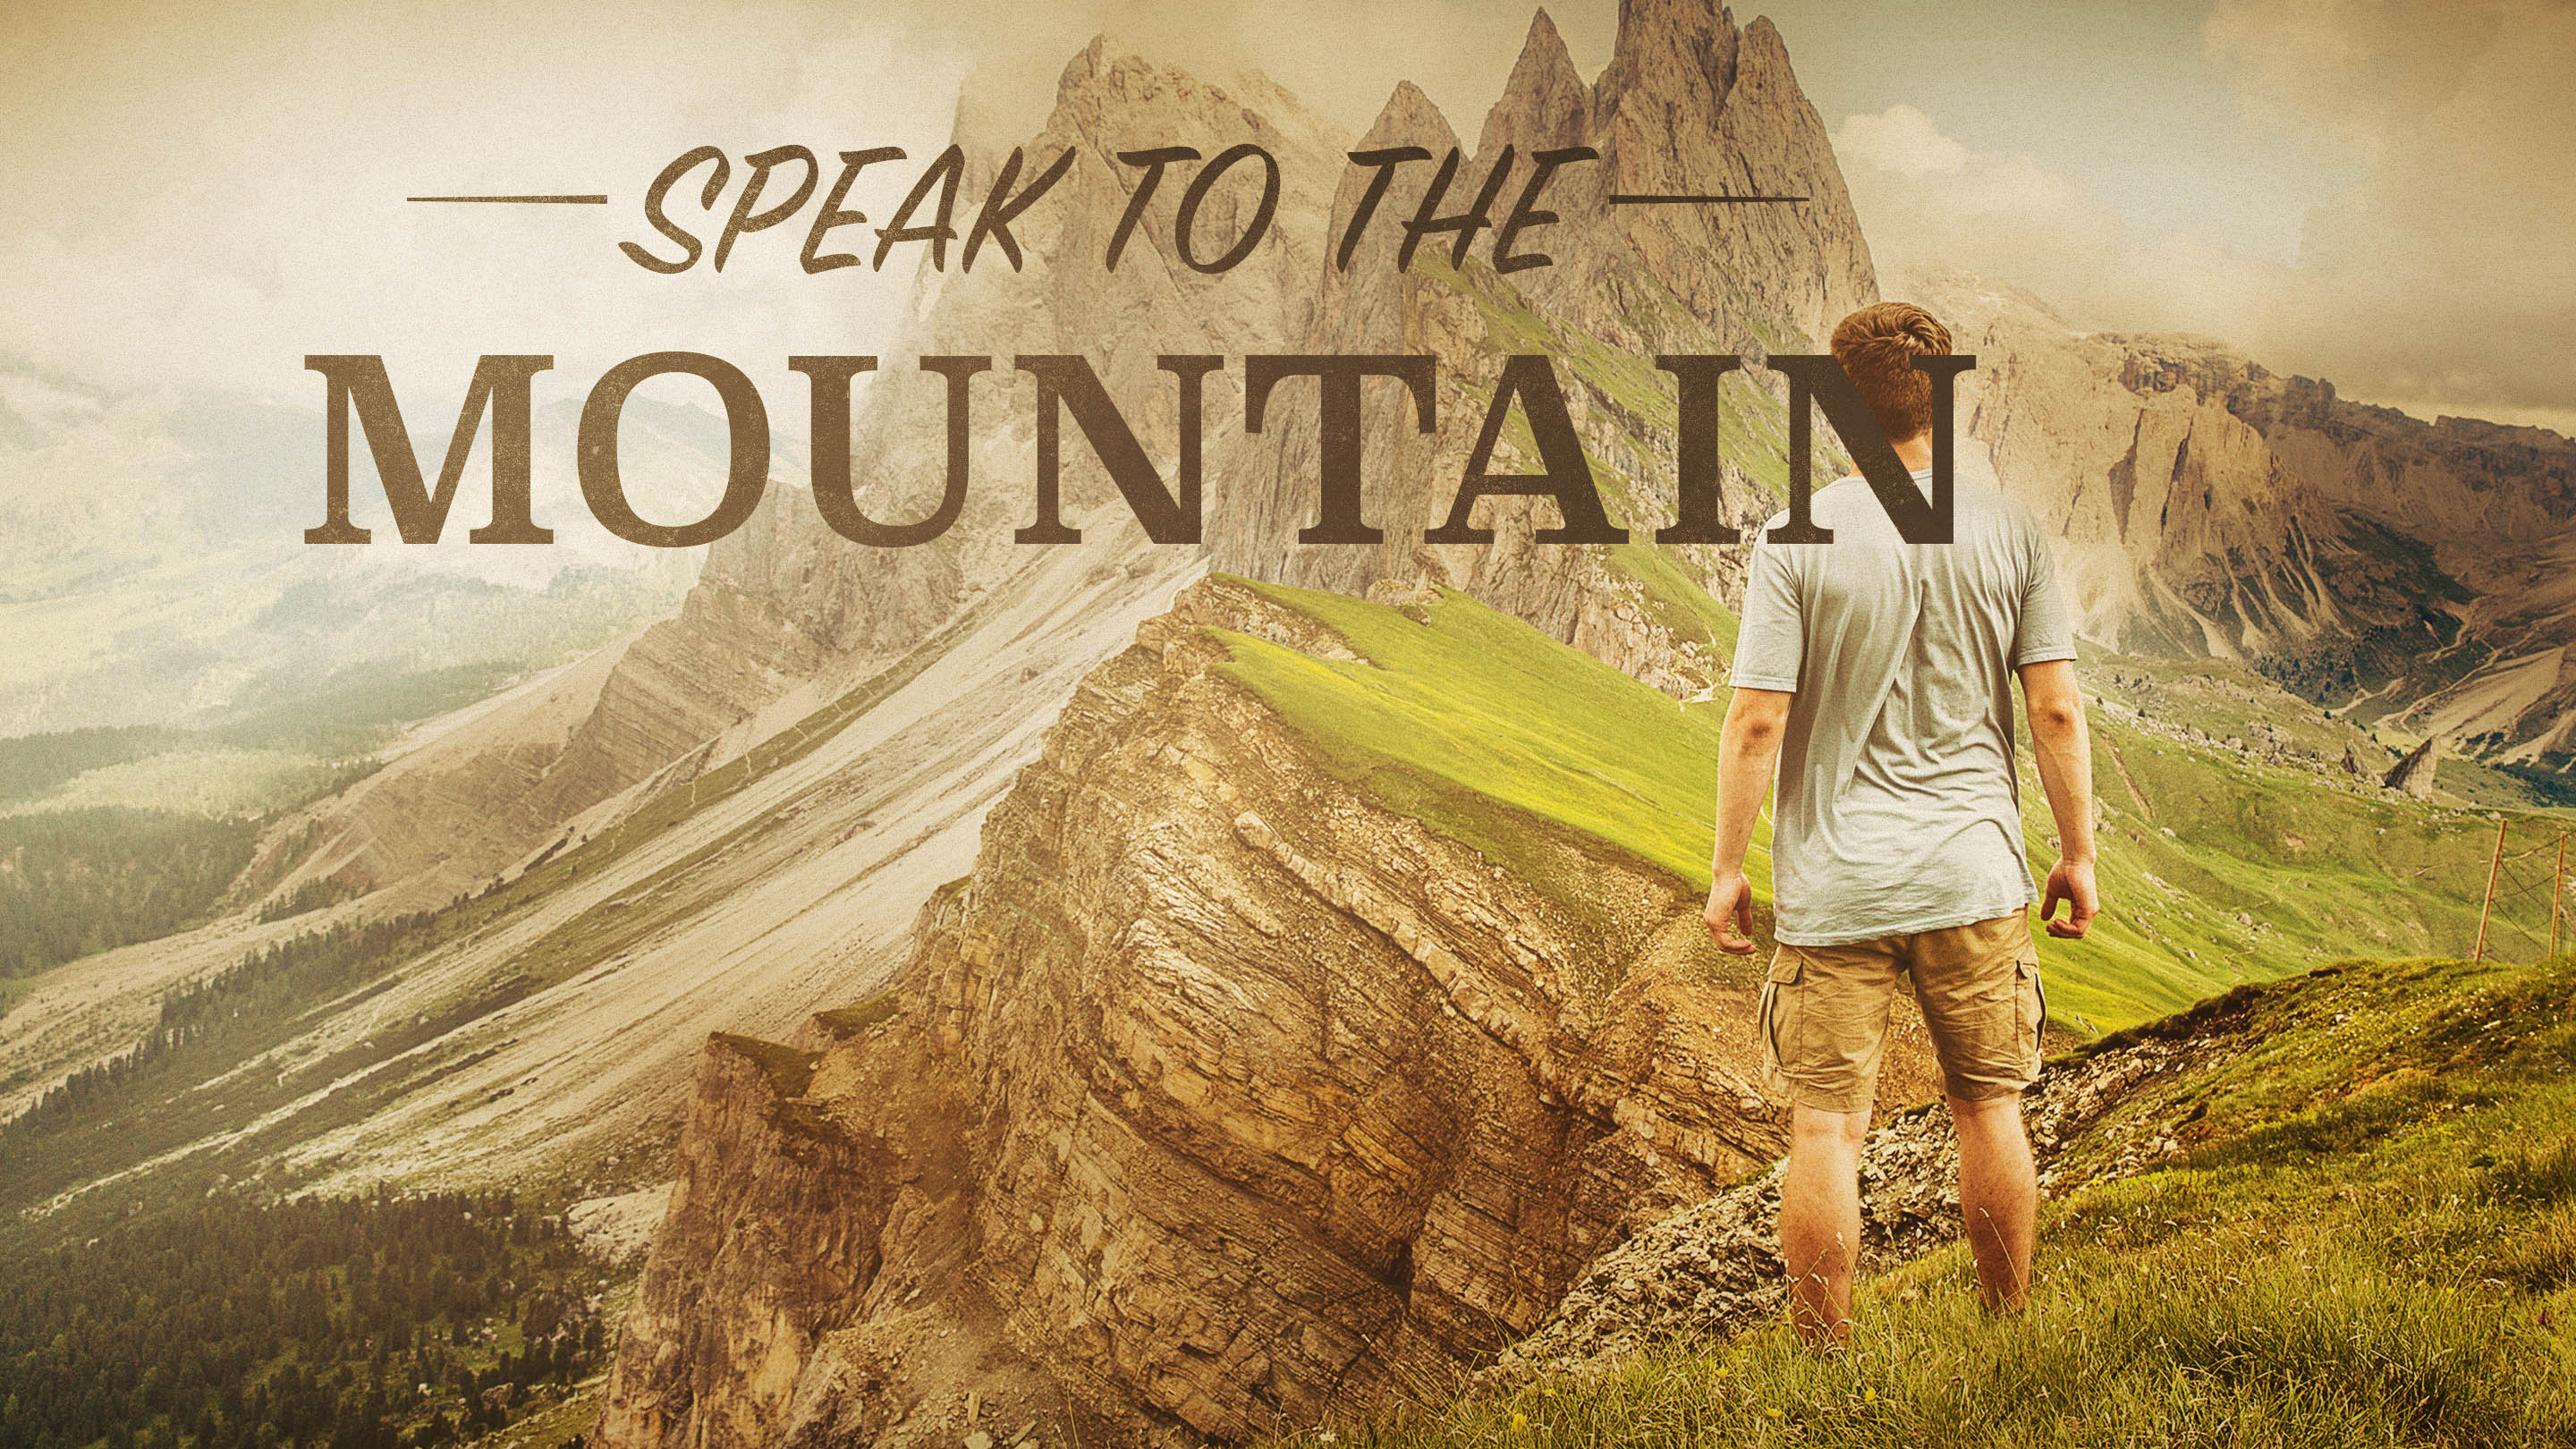 The Power of Prayer part 2 (Speak to the Mountain)